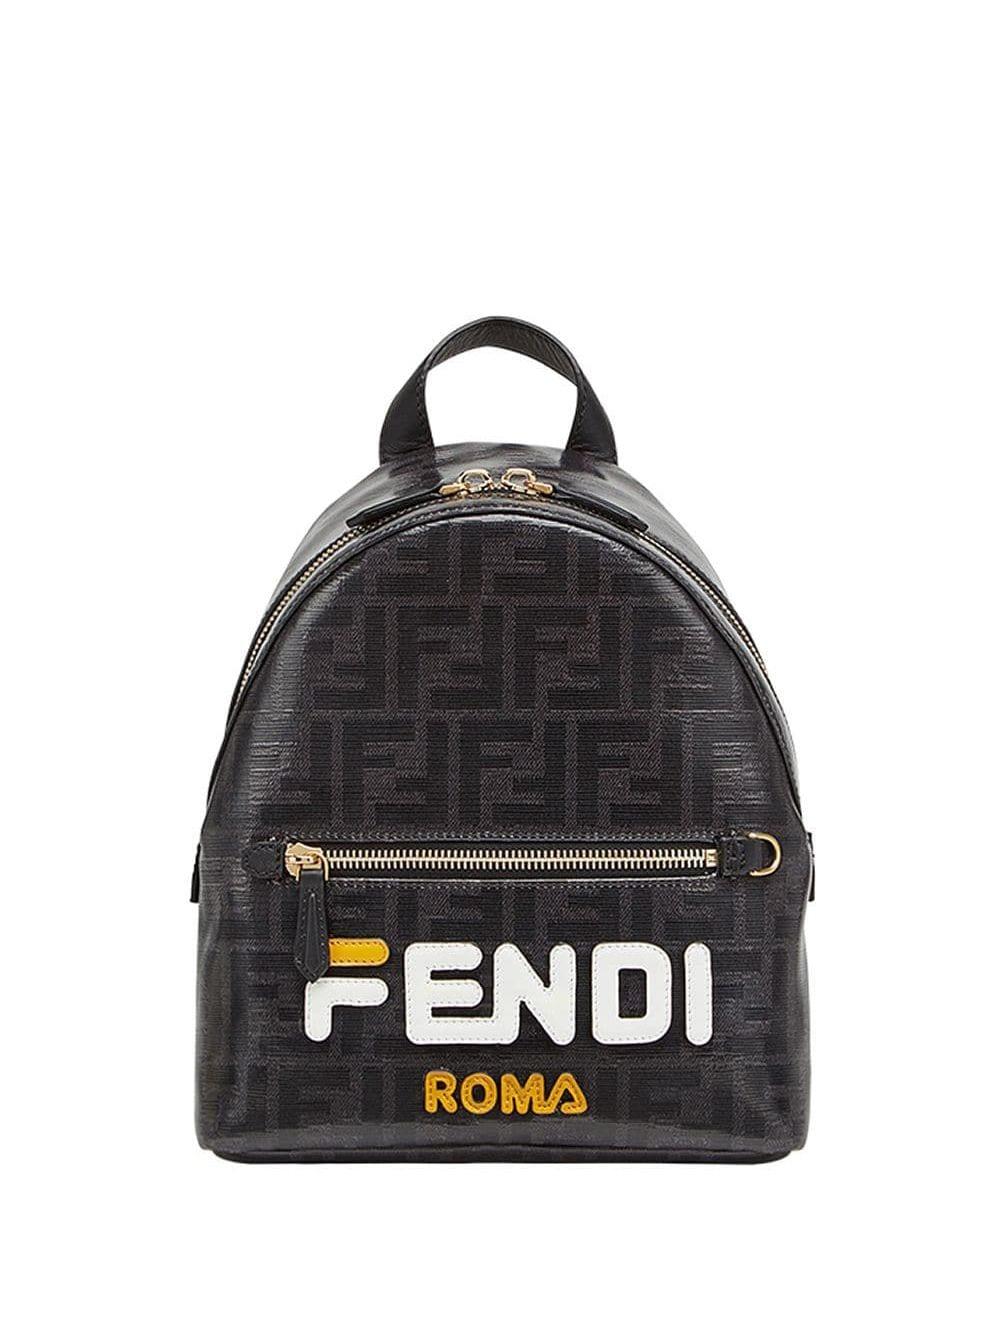 Fendi Mini Backpack Flash Sales, 52% OFF | www.ingeniovirtual.com